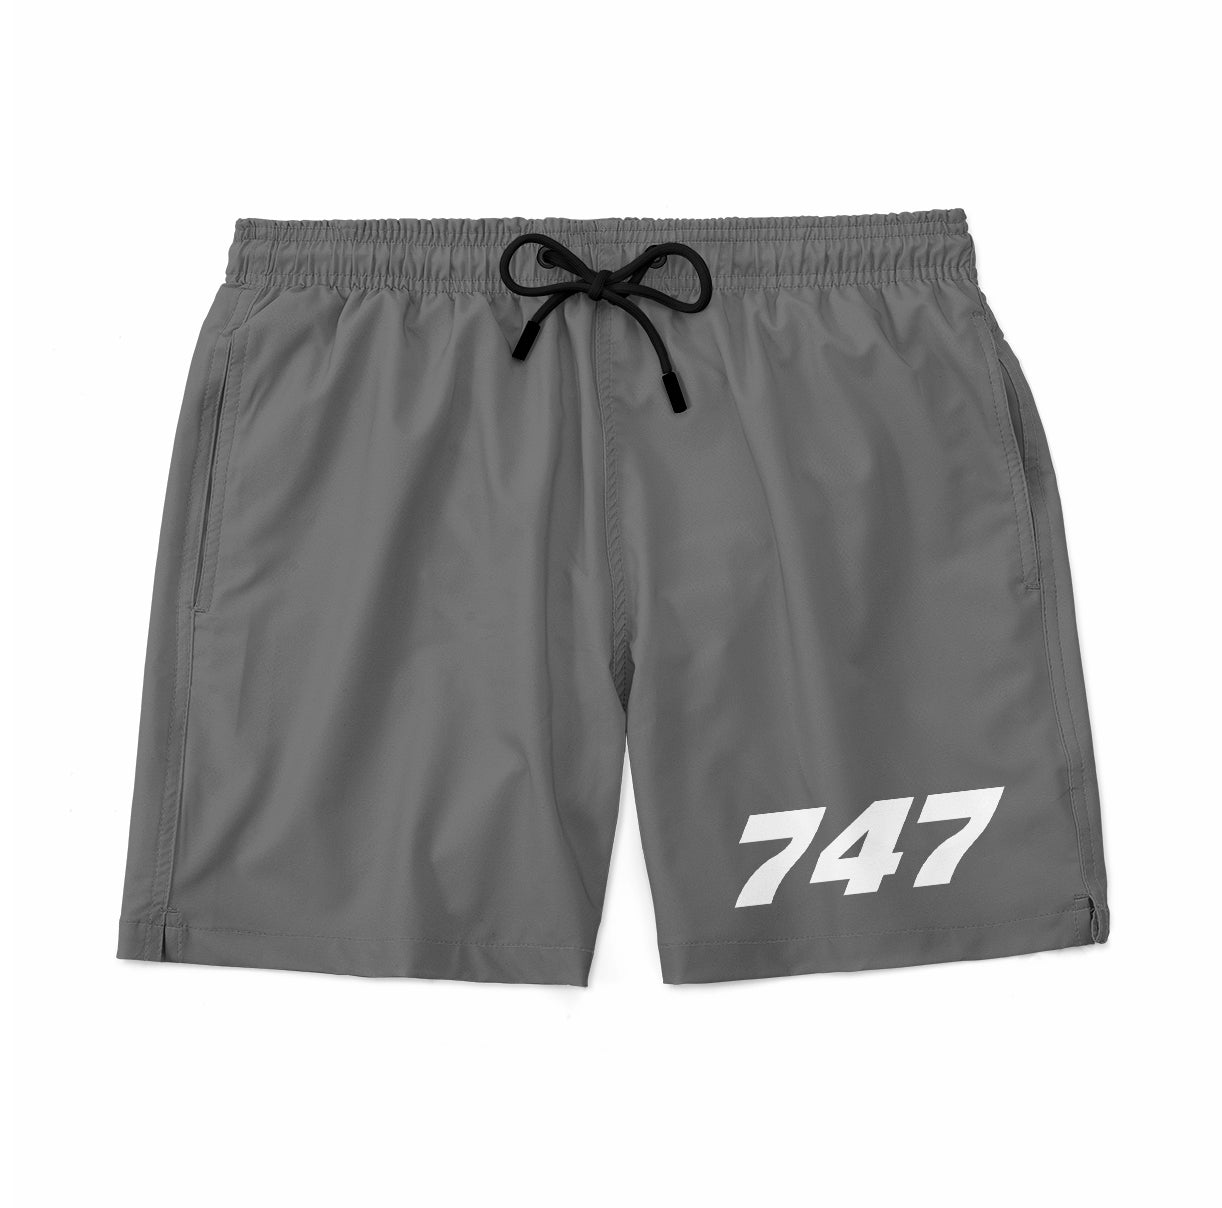 747 Flat Text Designed Swim Trunks & Shorts